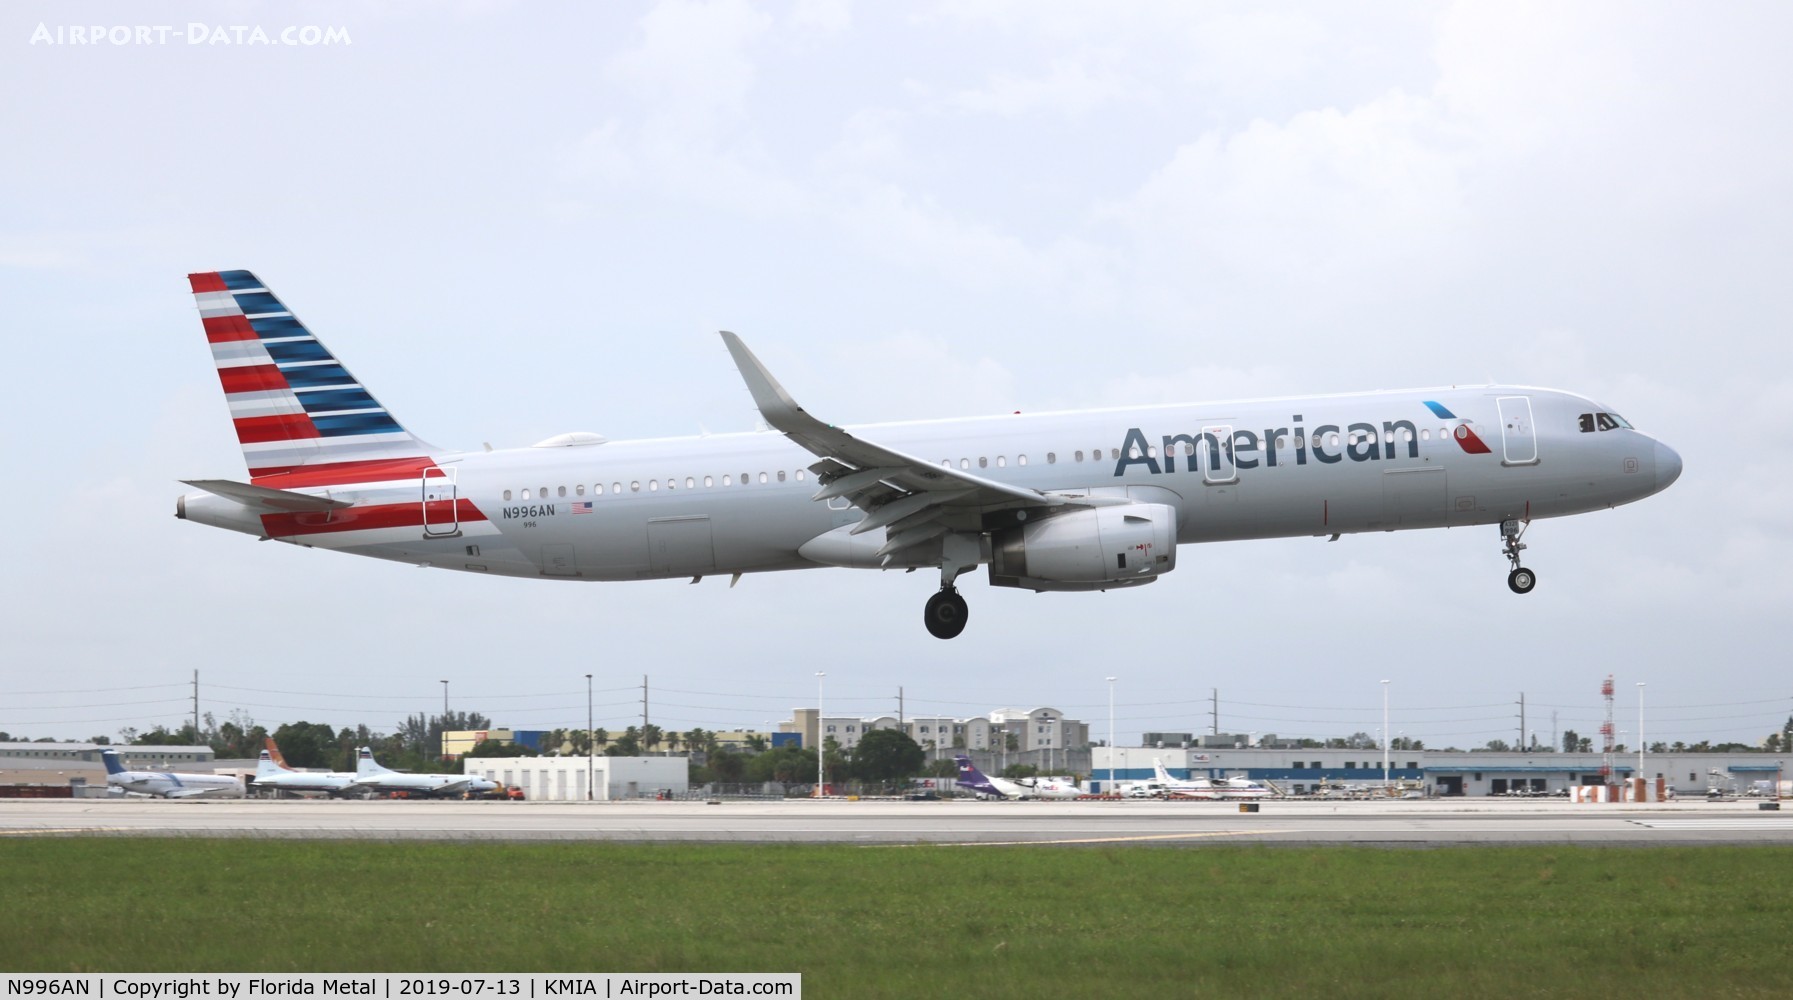 N996AN, 2016 Airbus A321-231 C/N 7310, American